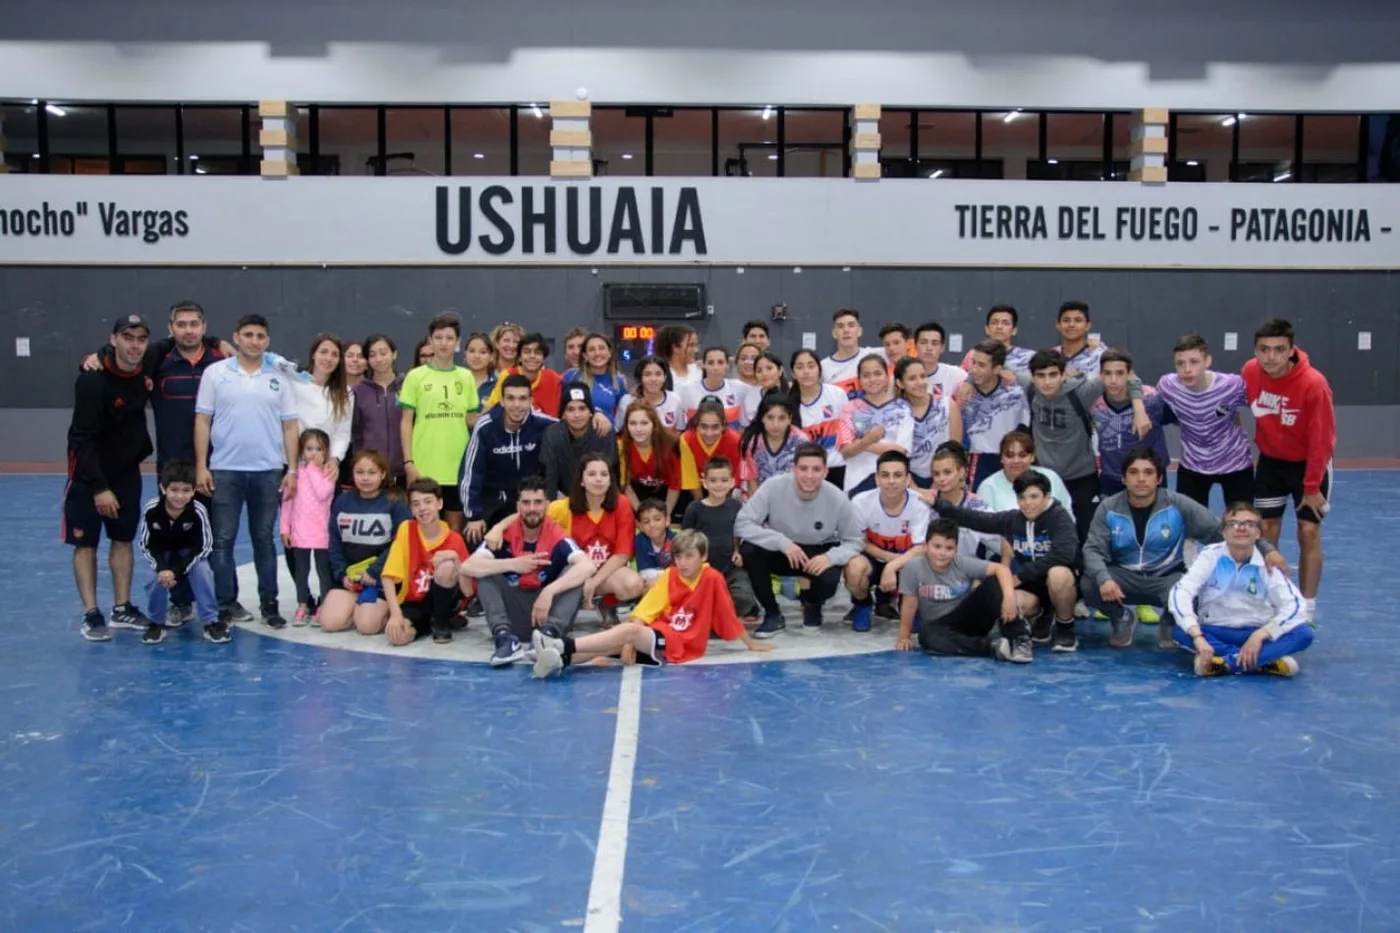 Jornada a puro futsal con el Ushuaia Mix